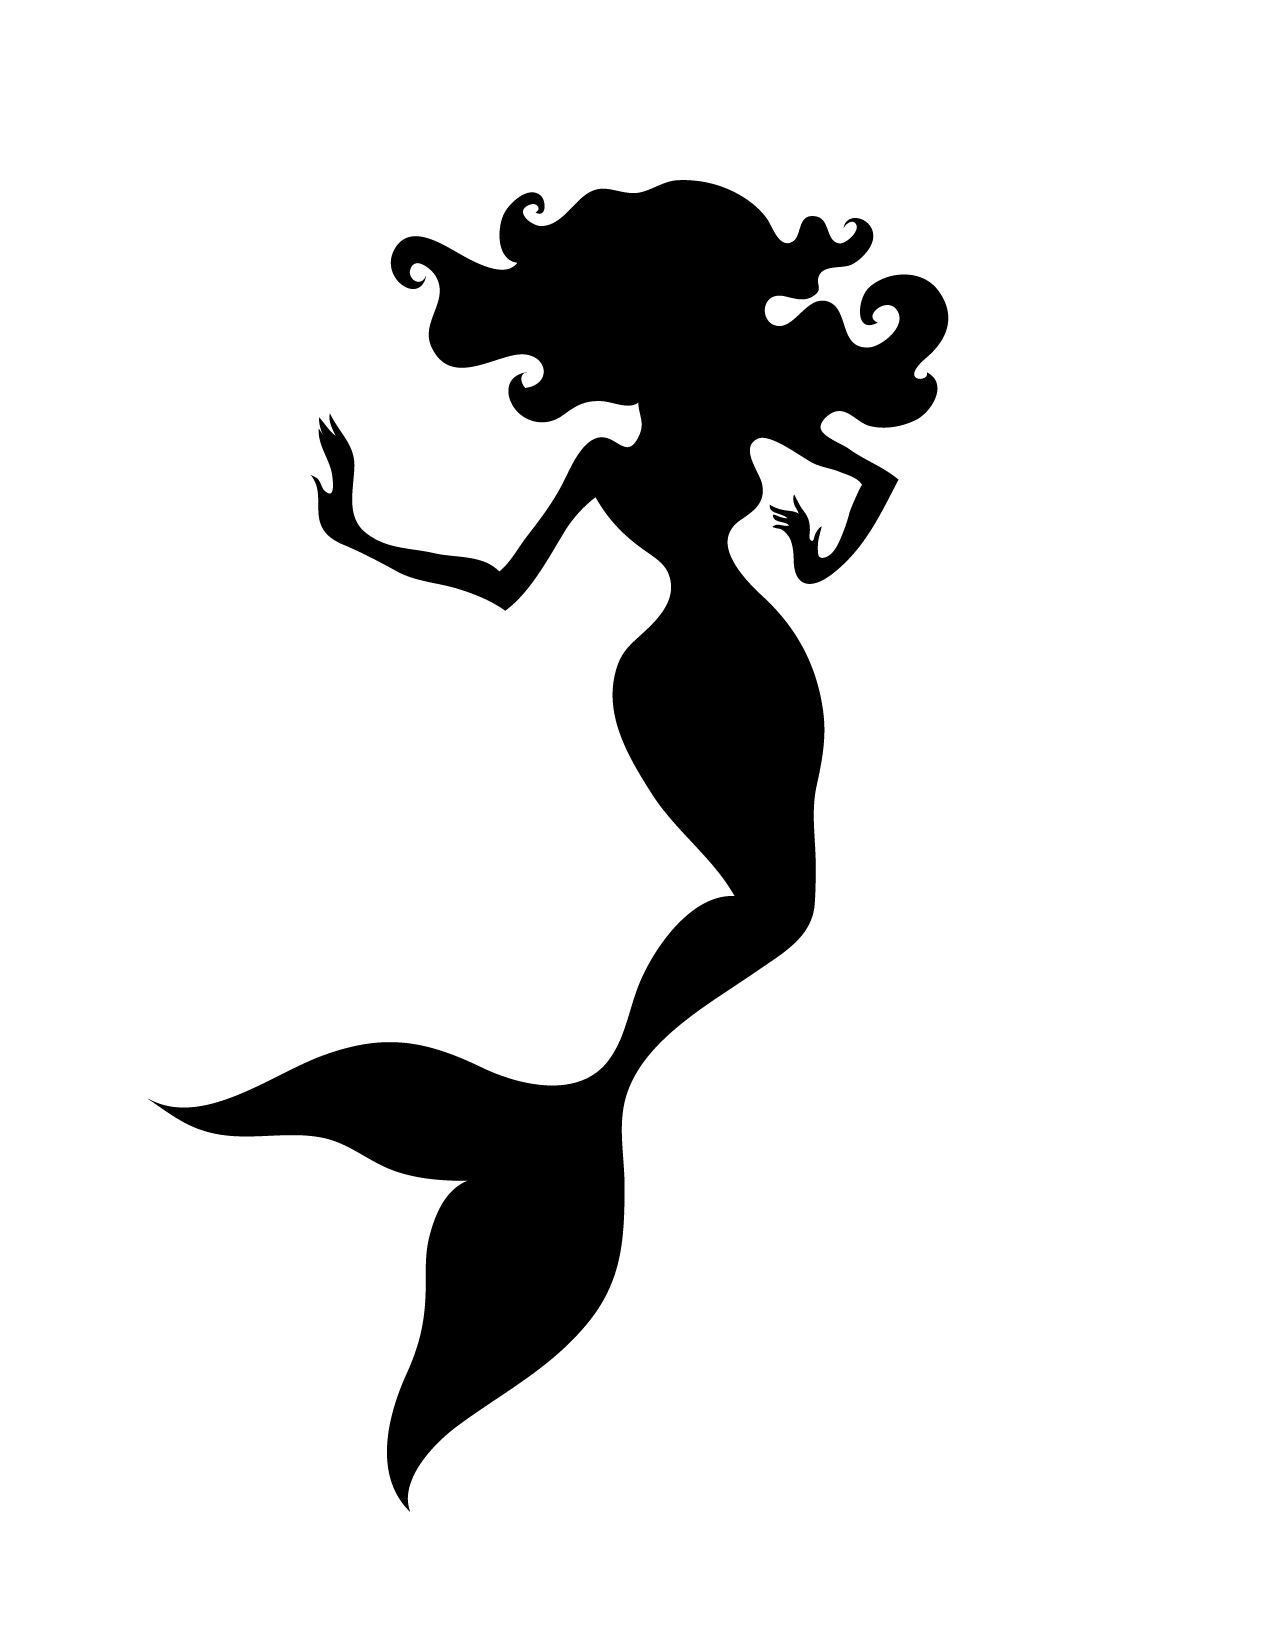 Mermaid clipart template. Swimming silhouette clip art